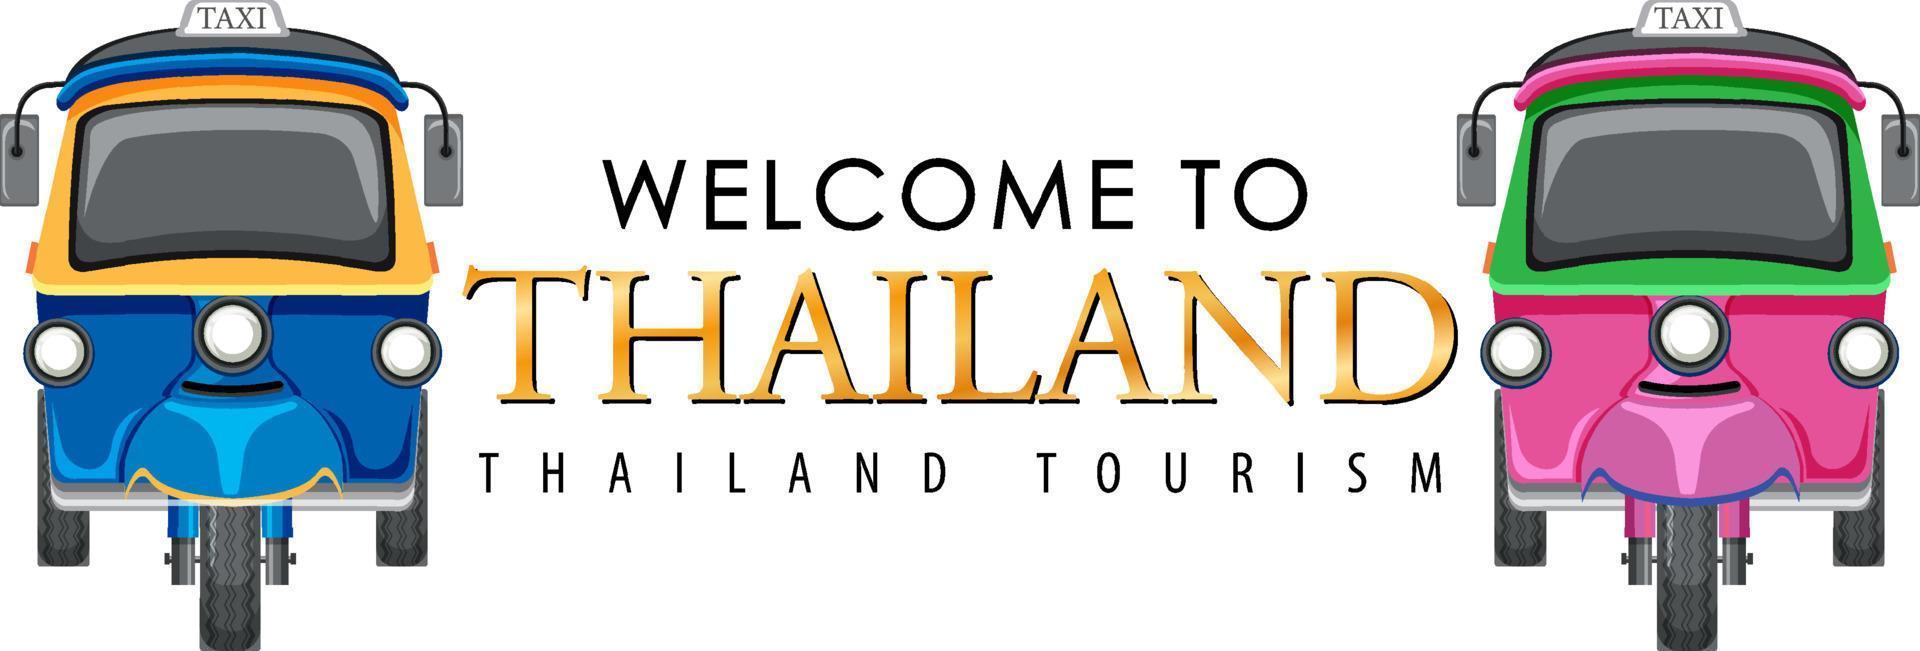 bangkok thailandia tuk tuk viaggio e icona turistica vettore